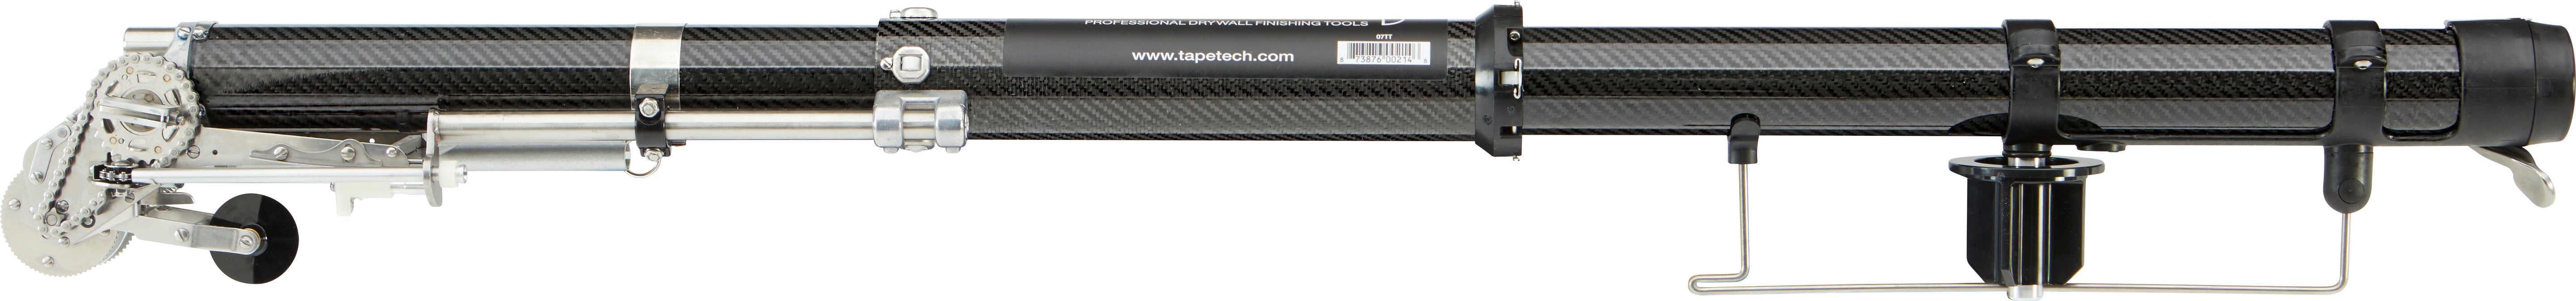 TapeTech Carbon Fiber Automatic Taper